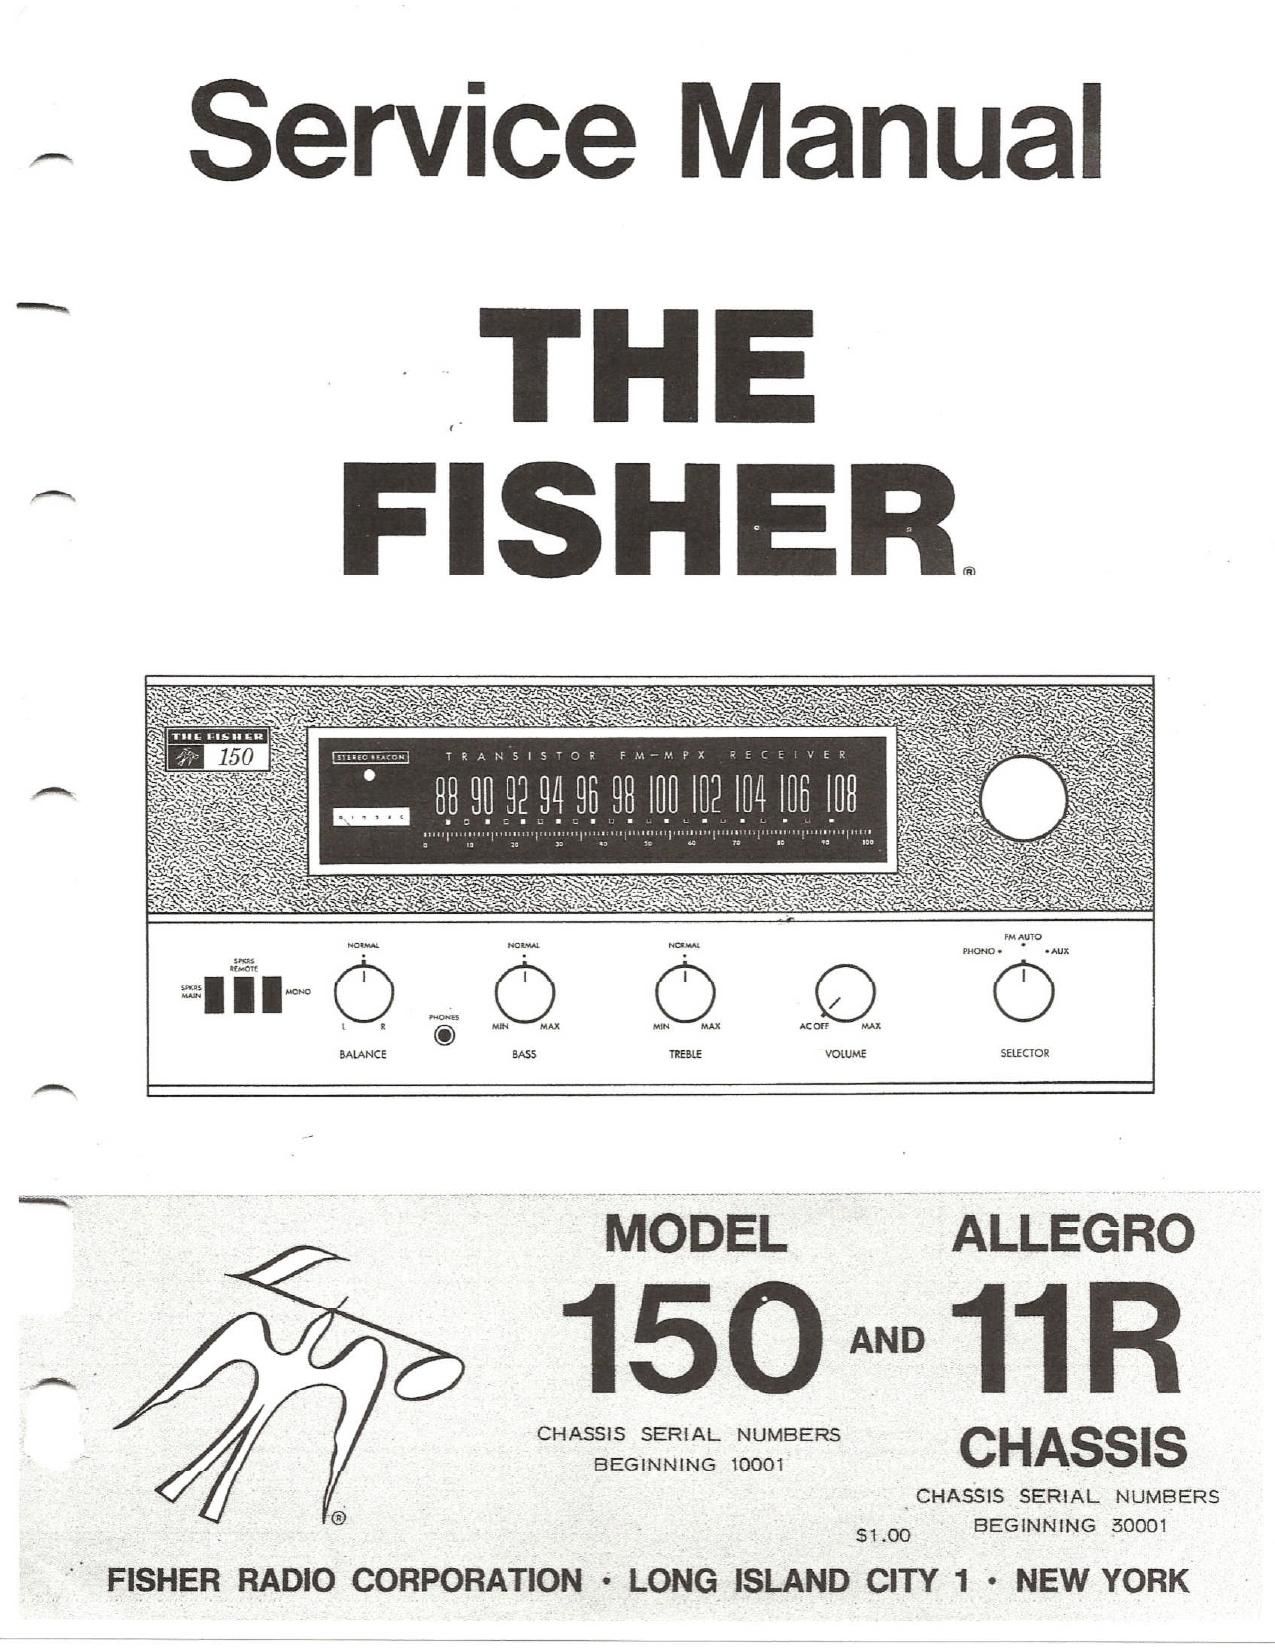 Fisher ALLEGRO 11 R Service Manual